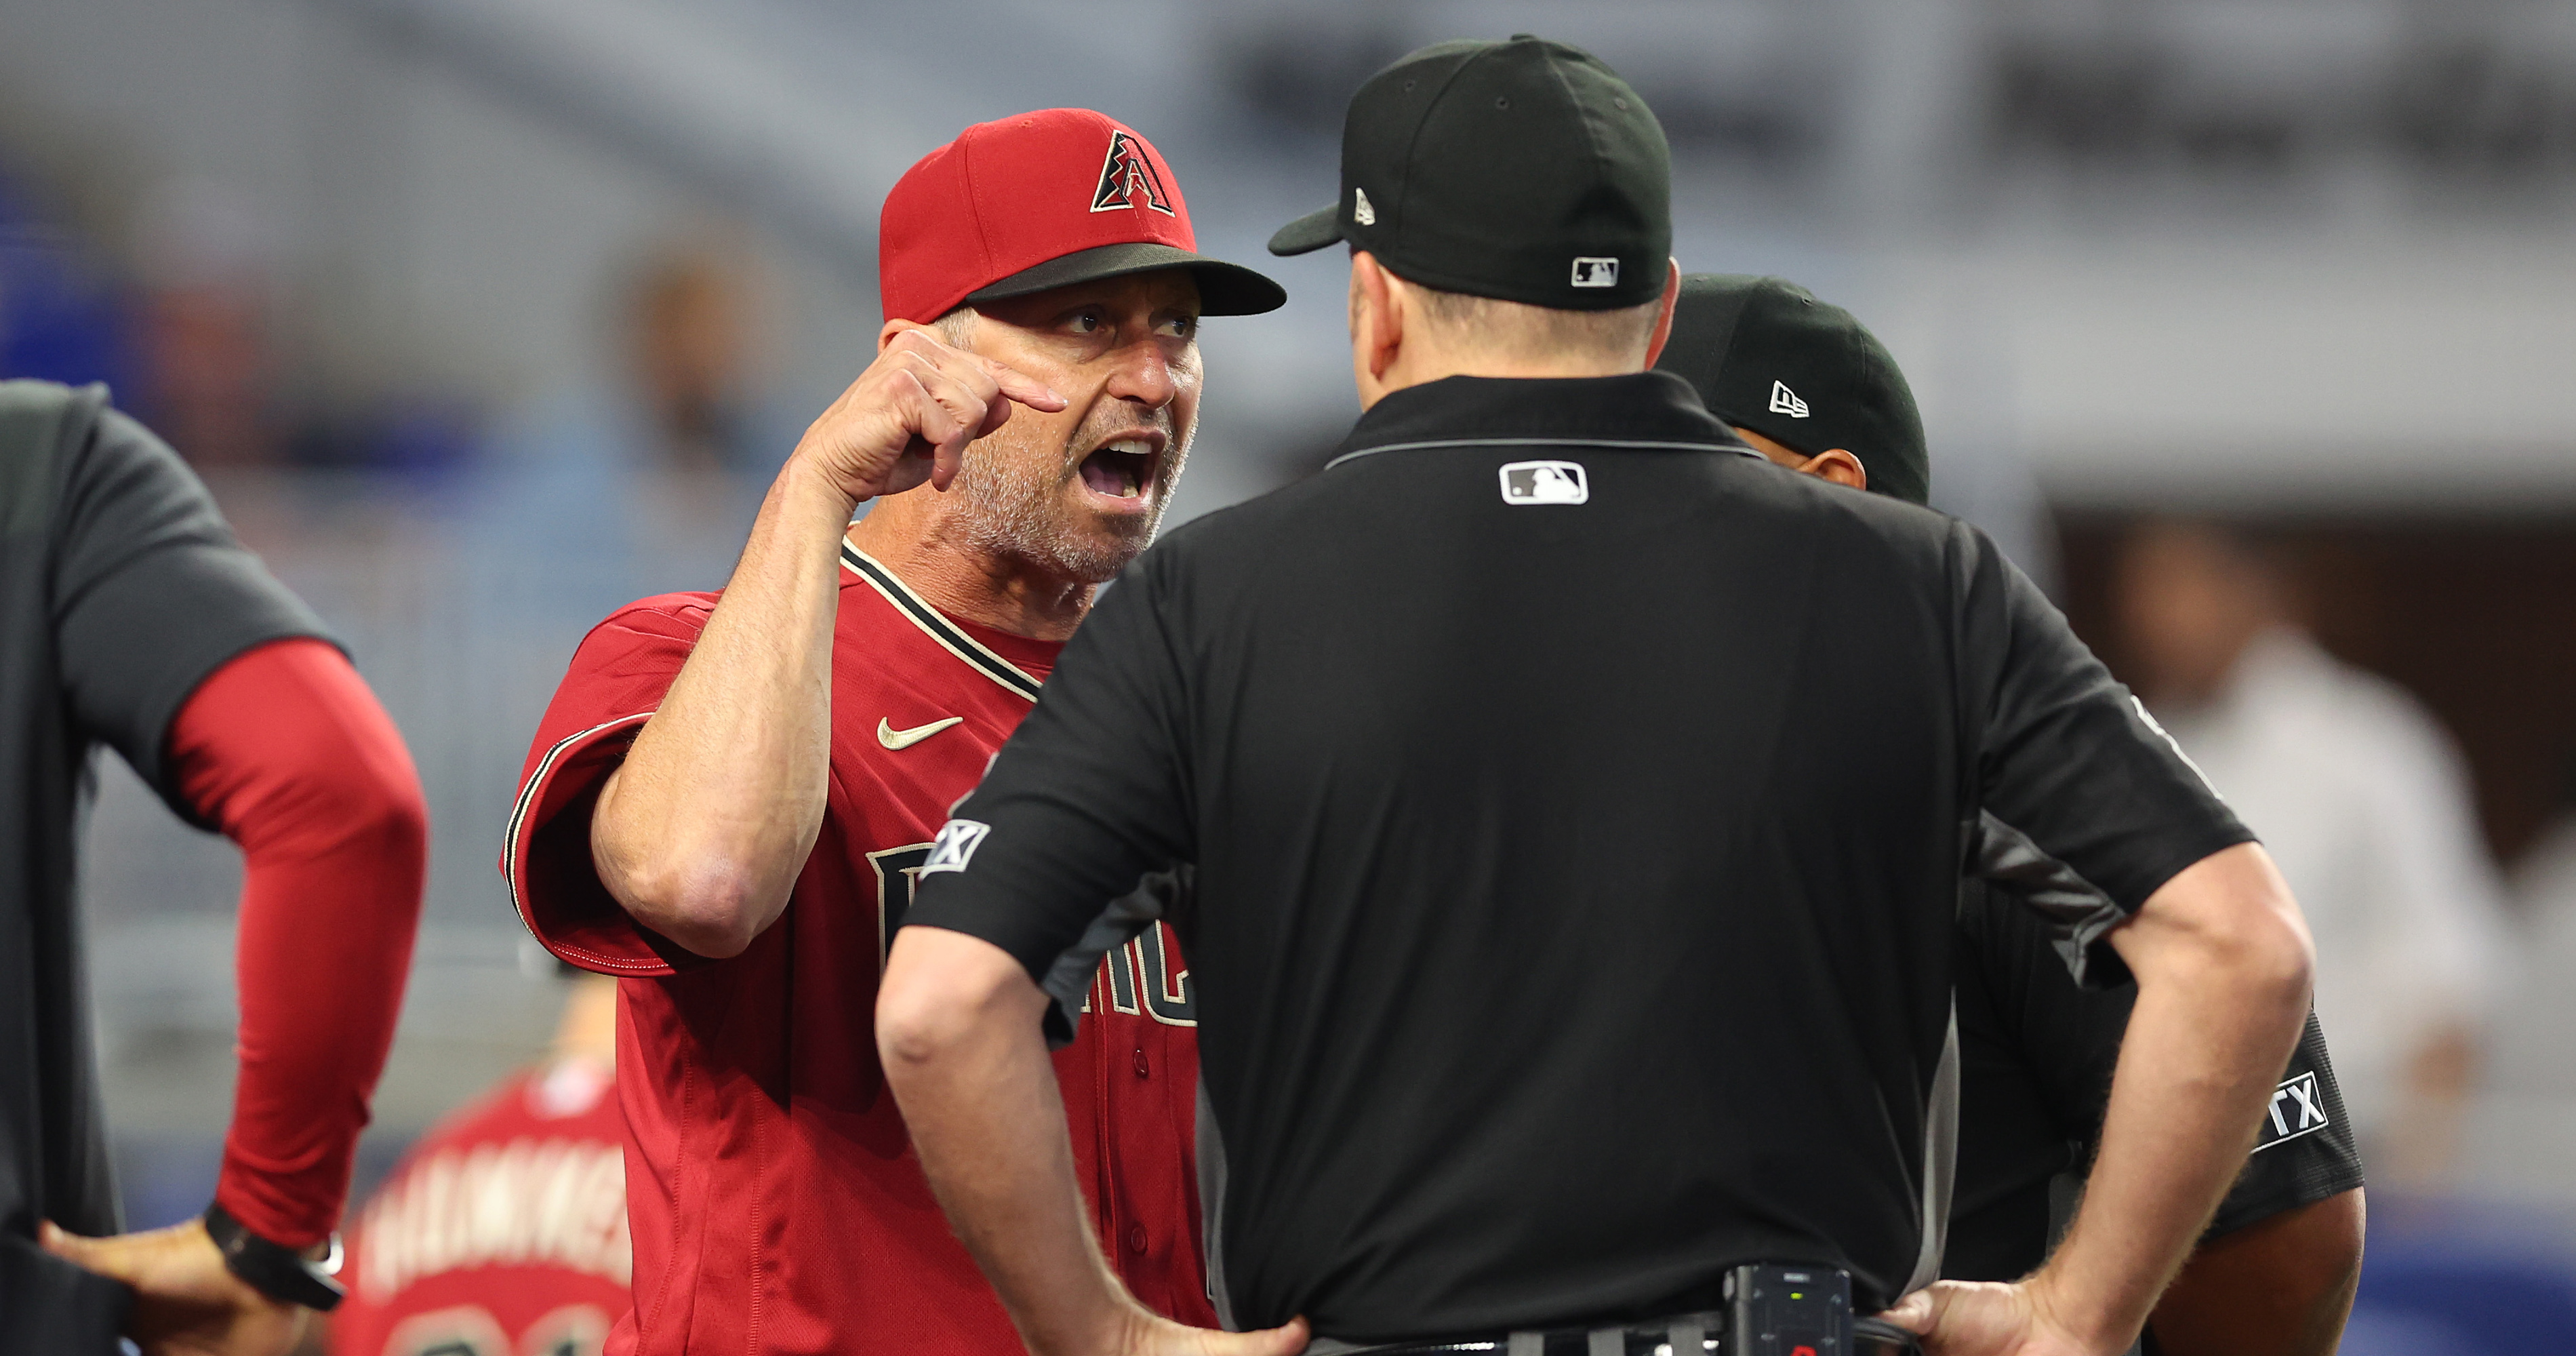 Umpire Ángel Hernández Loses Appeal of Discrimination Lawsuit vs. MLB, Sports-illustrated